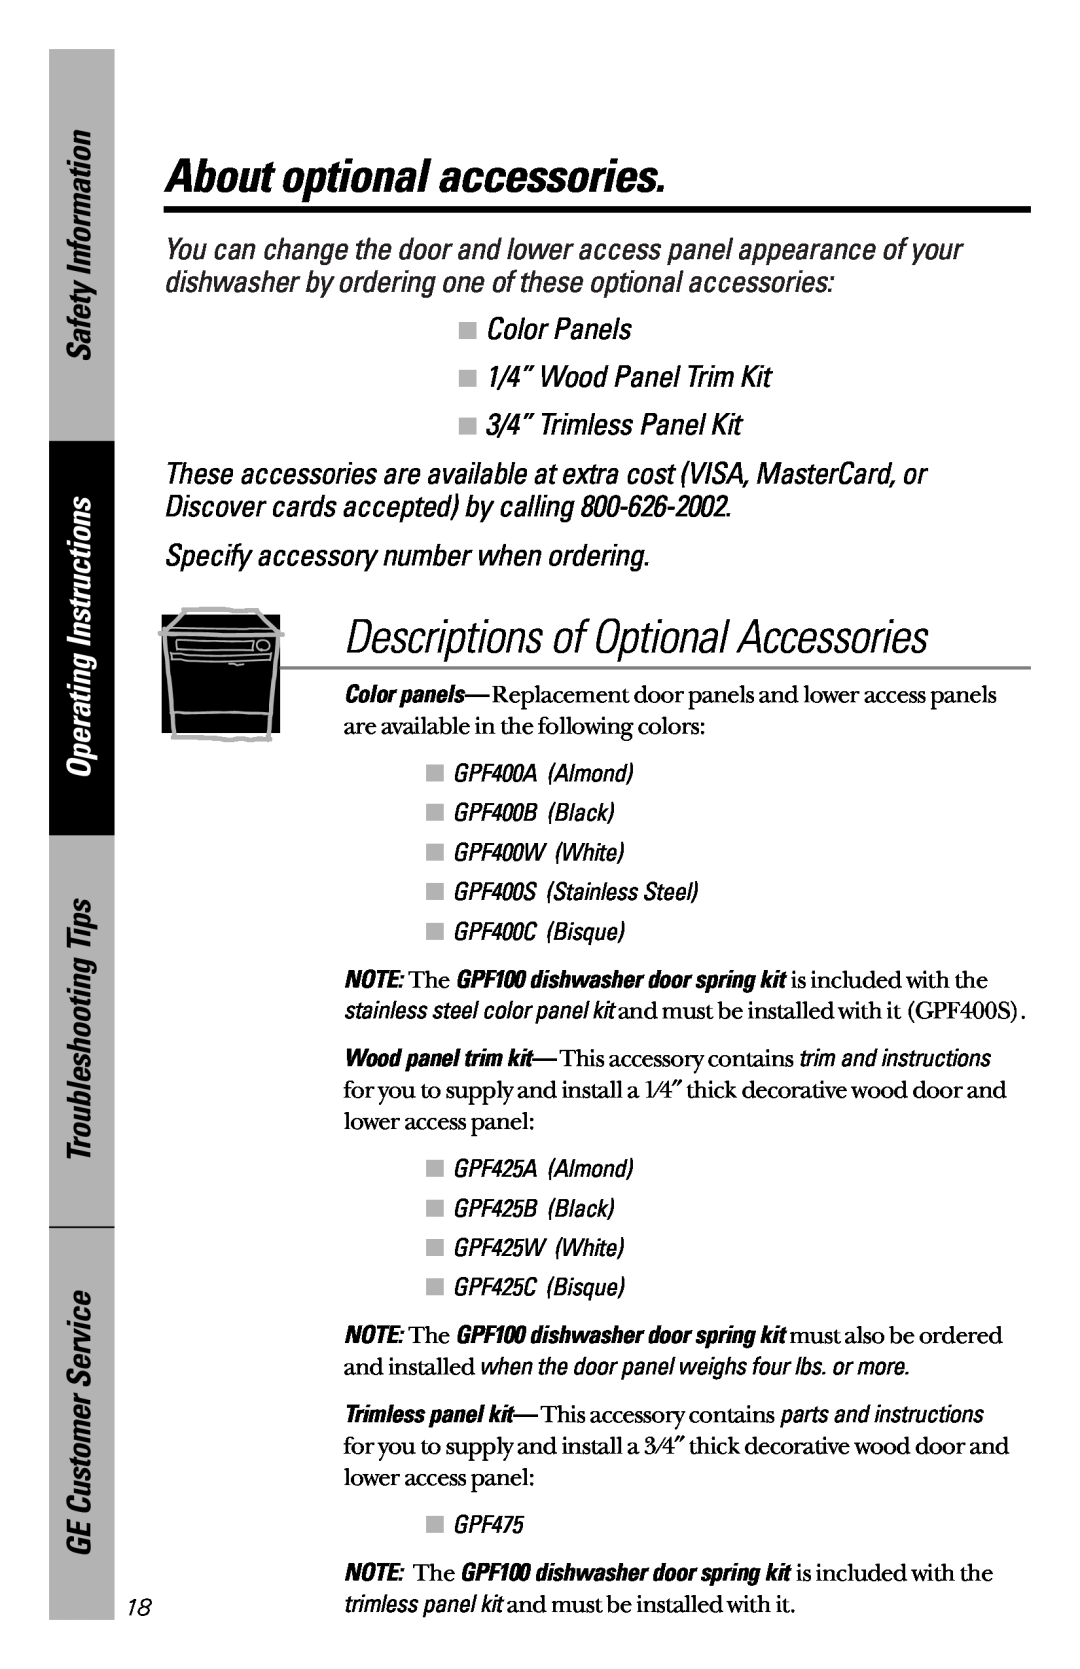 GE GSD5152 About optional accessories, Descriptions of Optional Accessories, Troubleshooting Tips GE Customer Service 